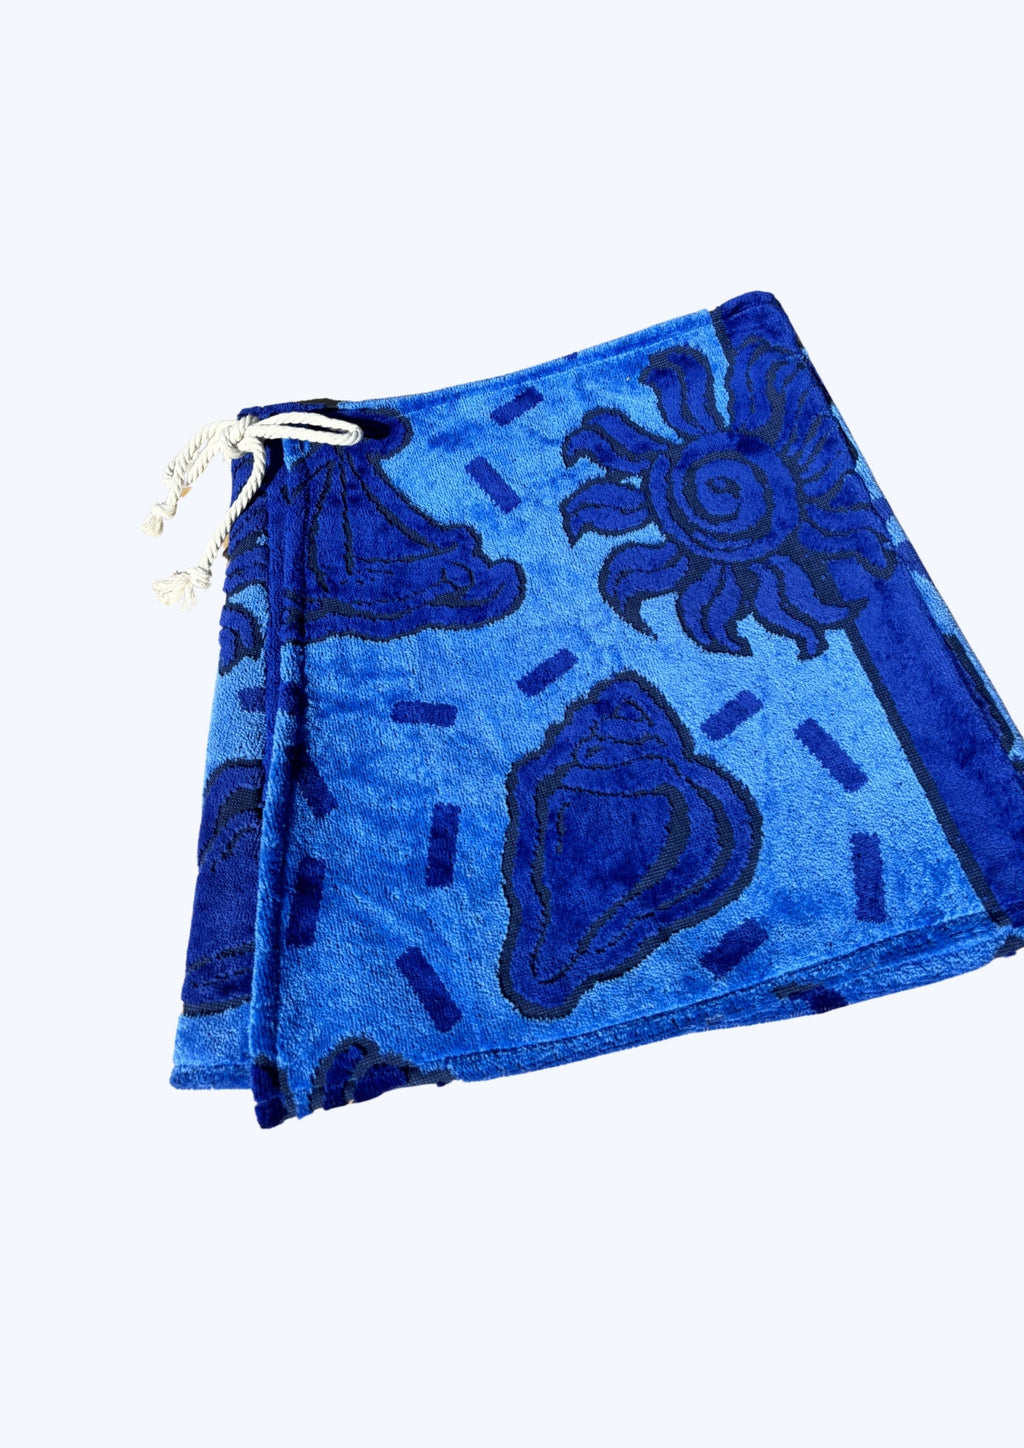 Towel Wrap Skirt - Blue Lagoon